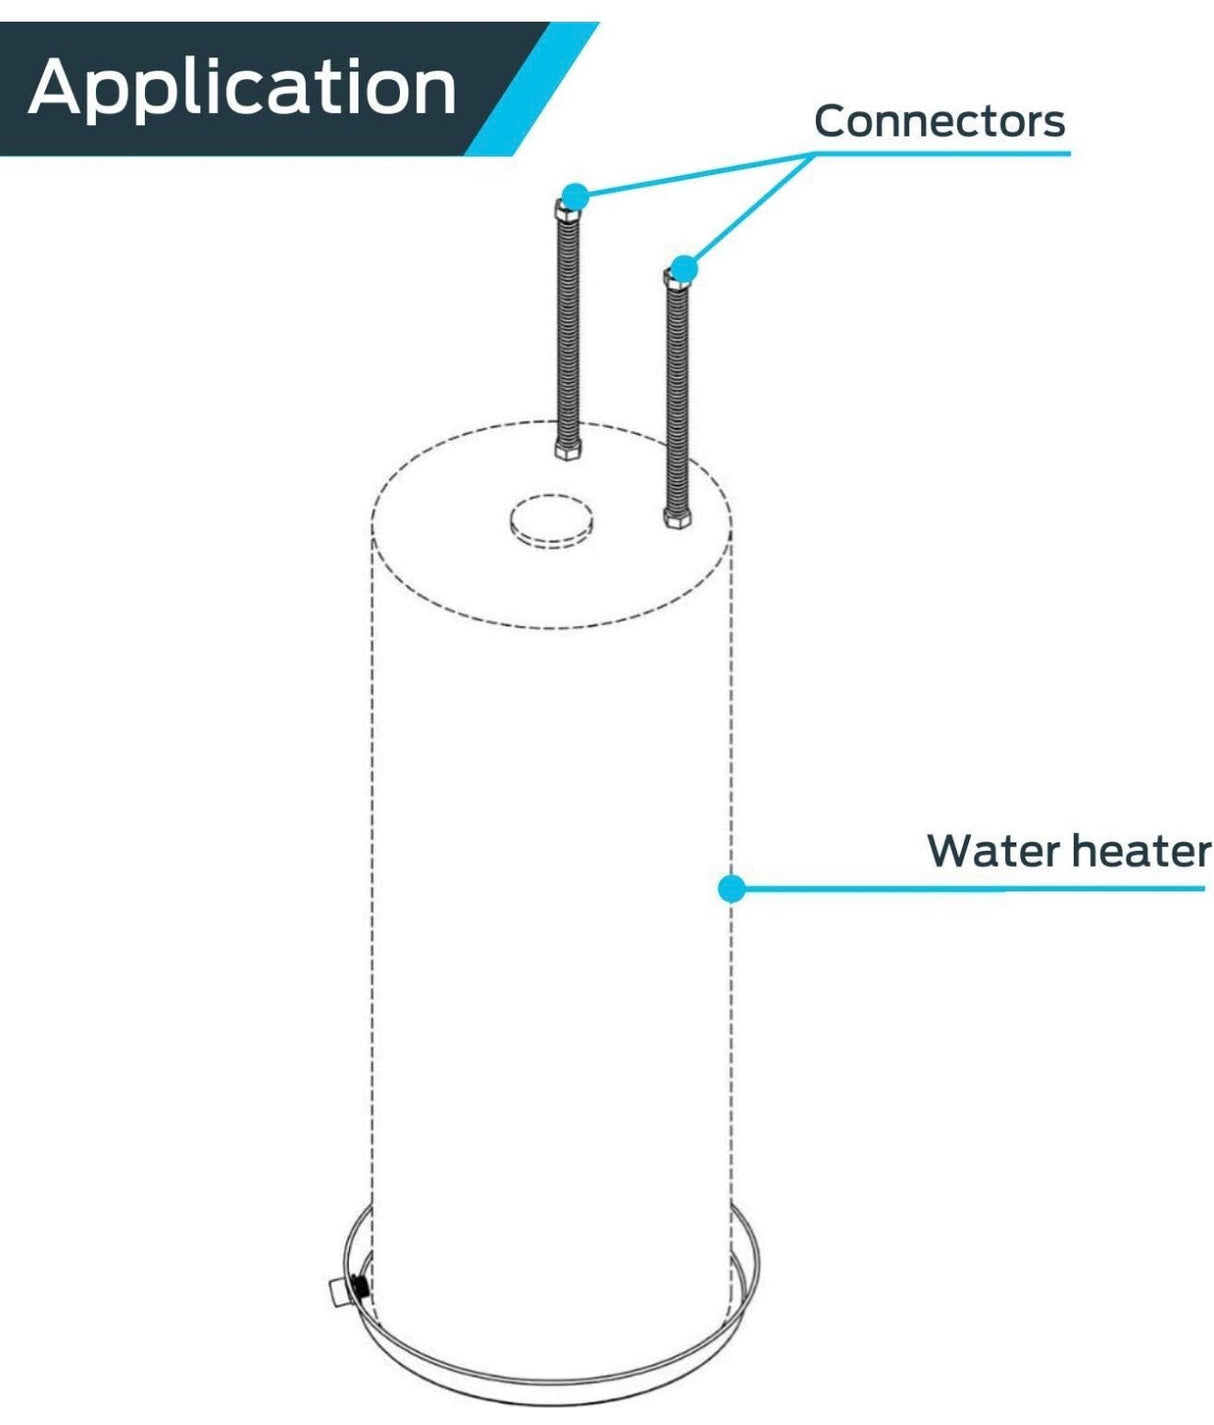 HoldRite QuickFlex 3/4 Inch FIP x 3/4 Inch FIP x 24 Inch Water Heater Connector